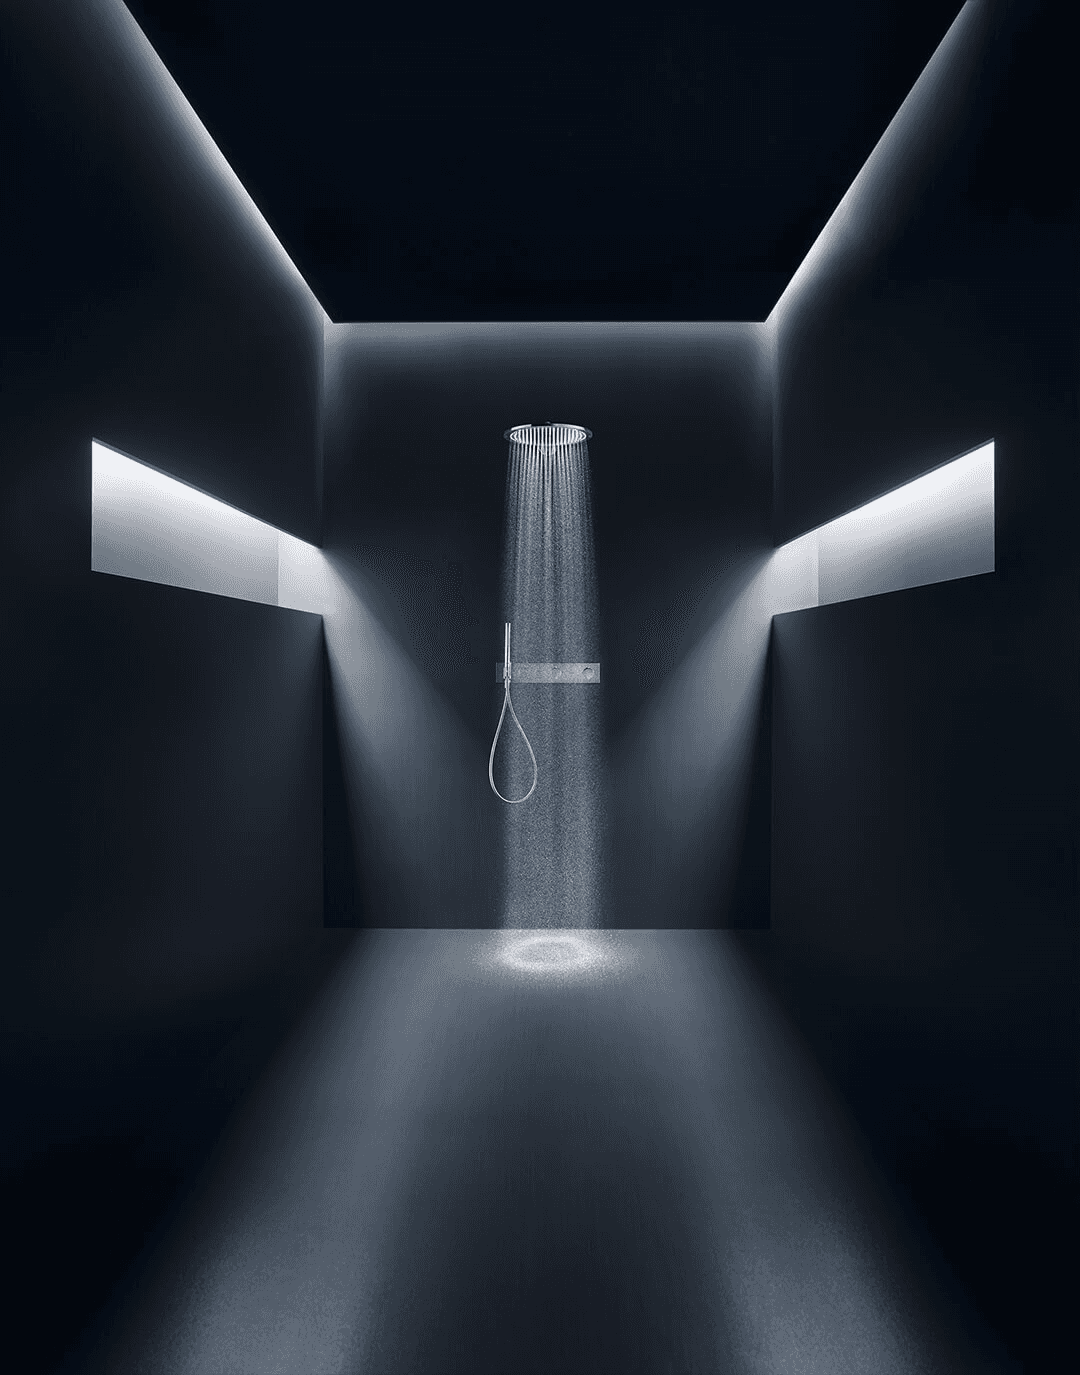 Incredible bathroom lighting creates a floating effect